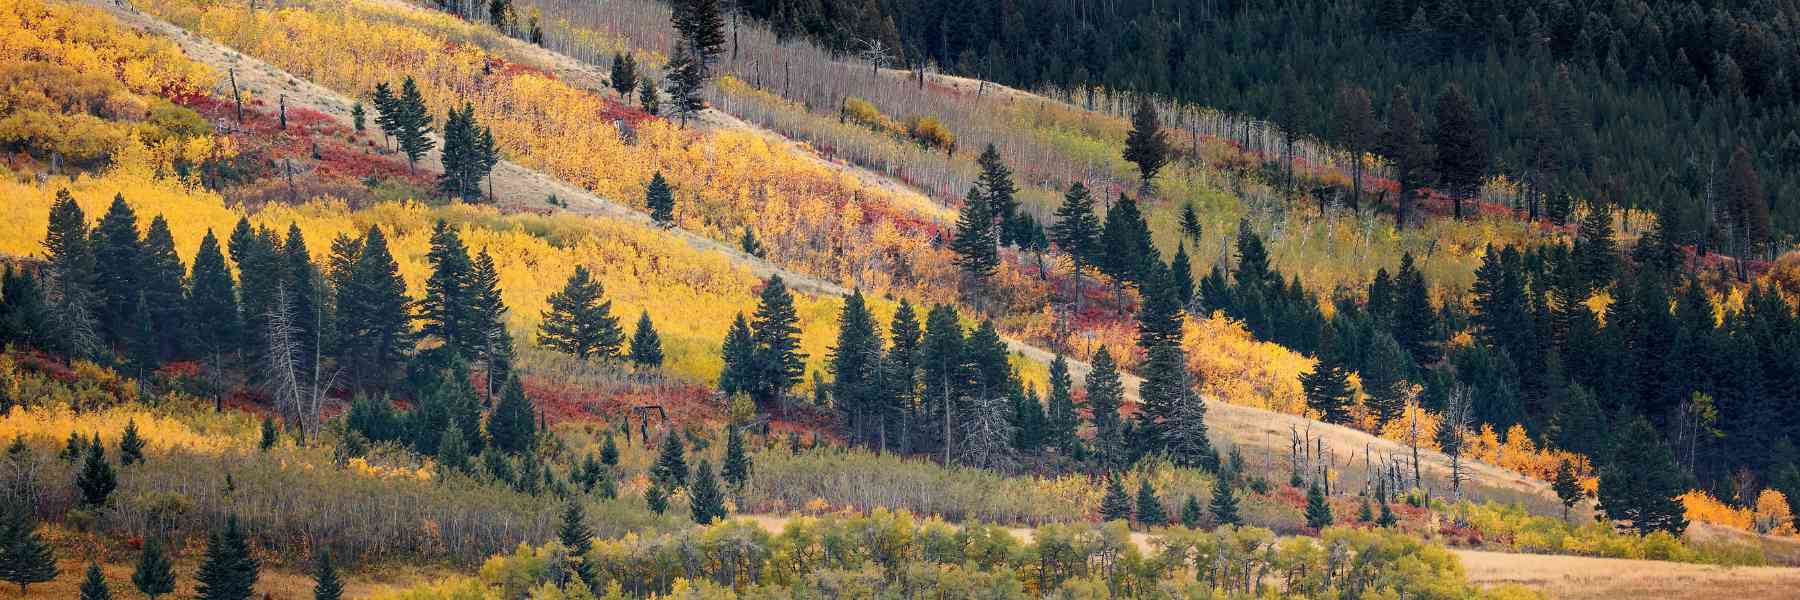 Fall Colors In Bozeman, Montana